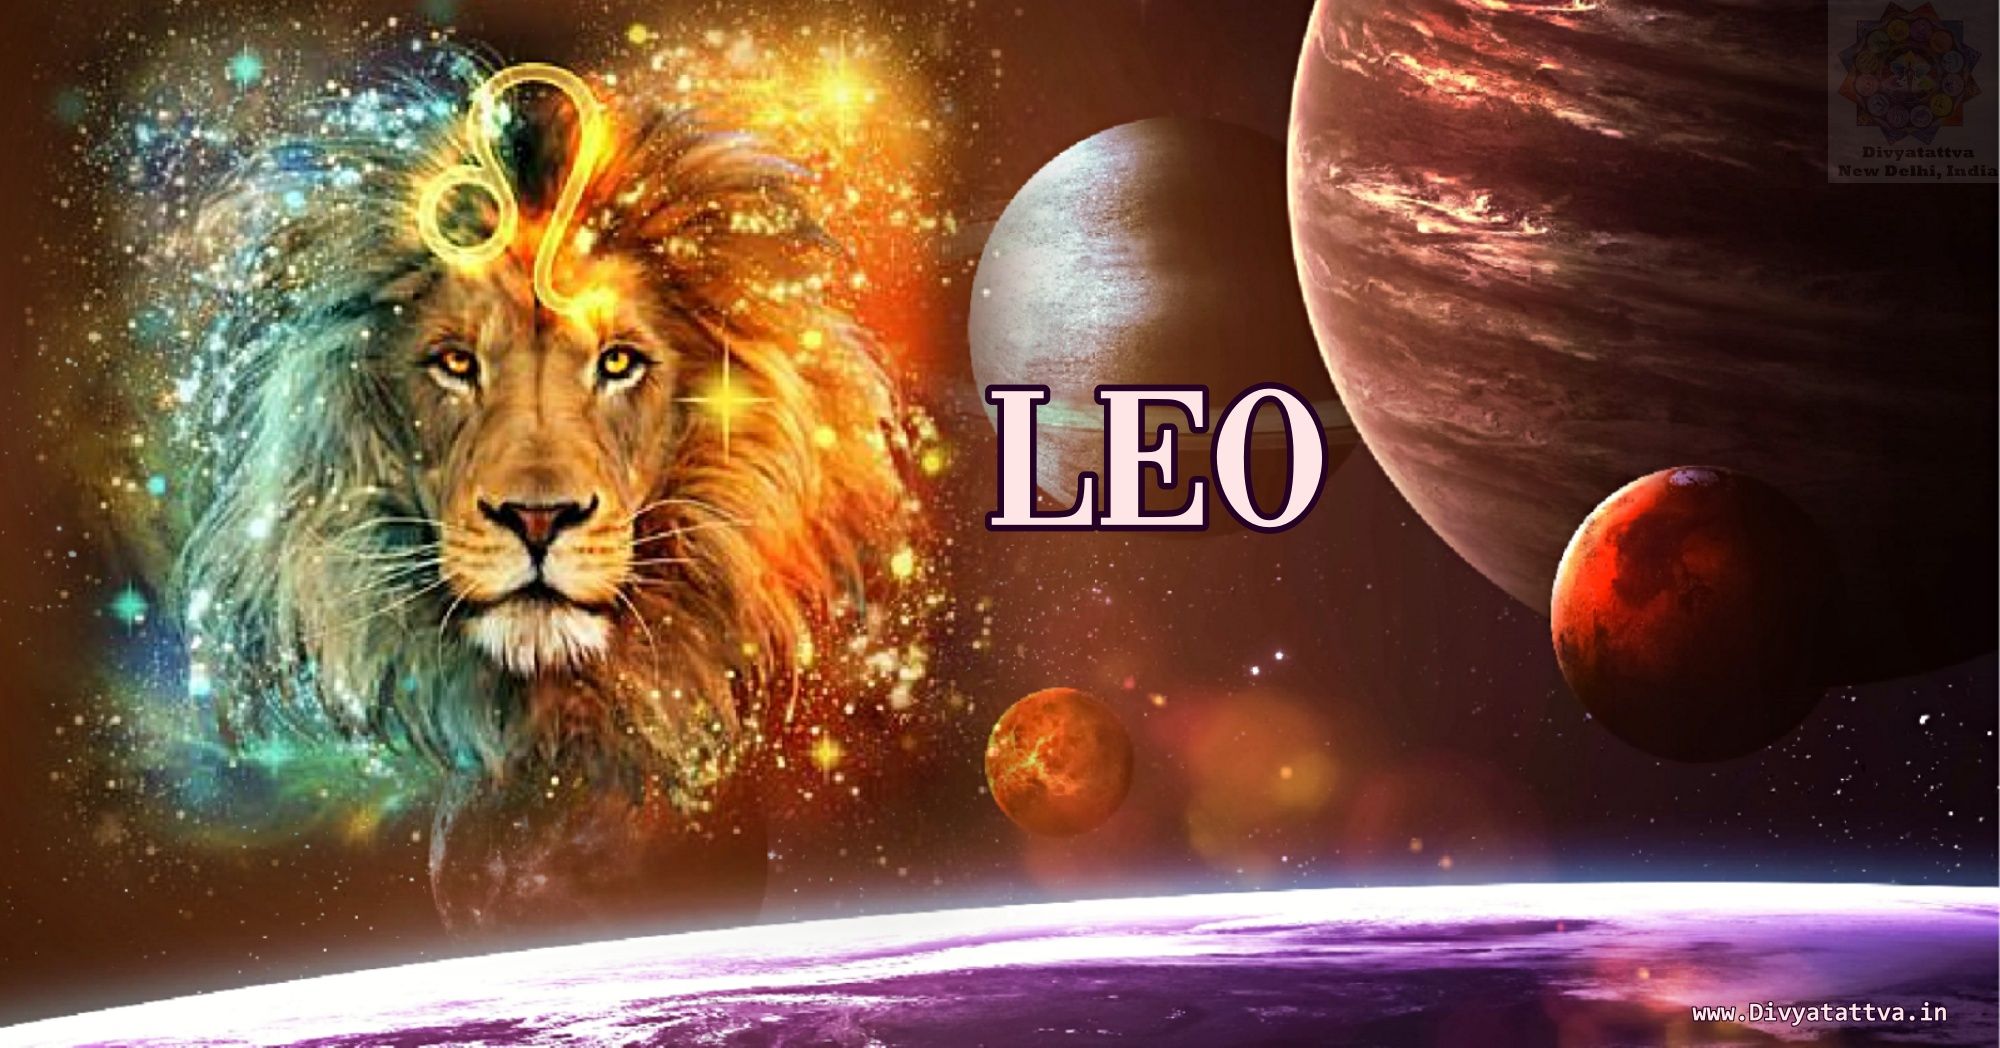 Leo horoscope for this week - Leo